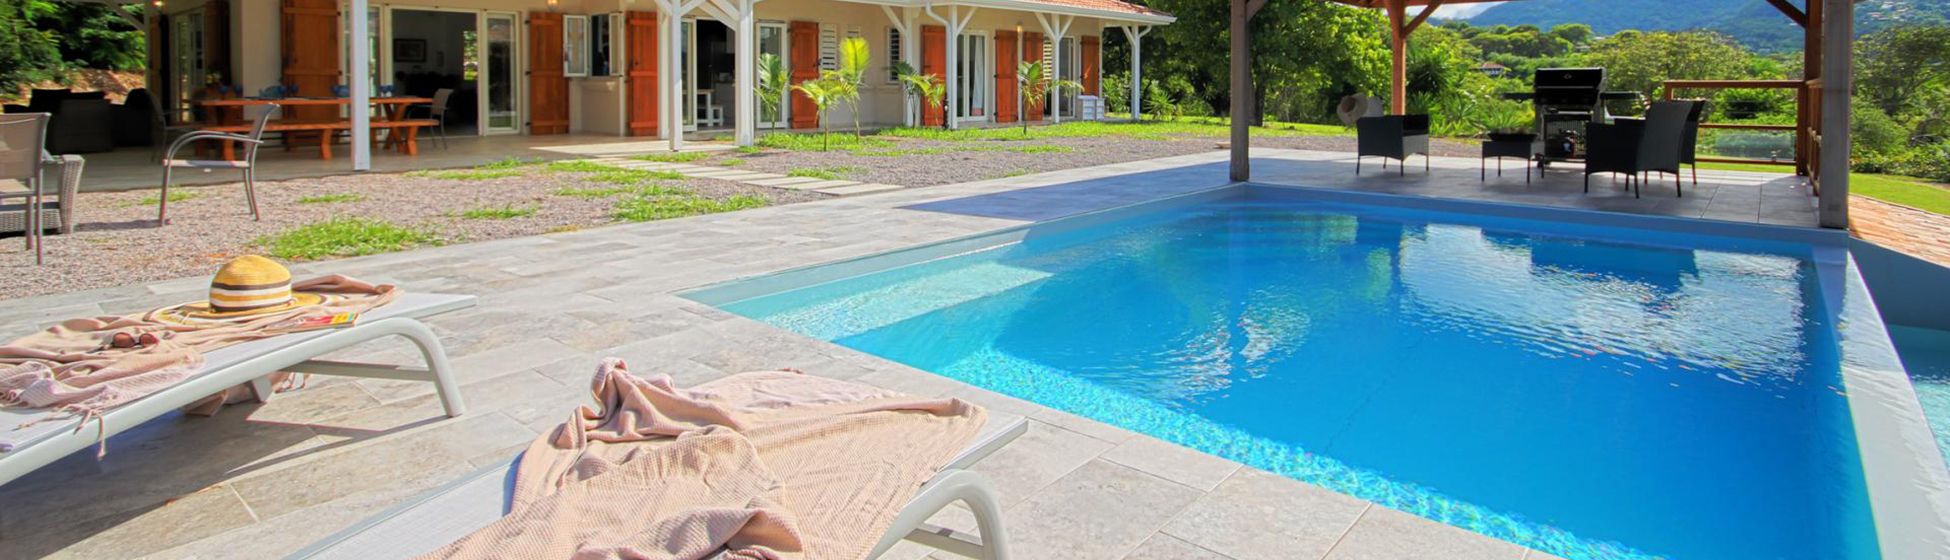 Location villa avec piscine martinique particulier